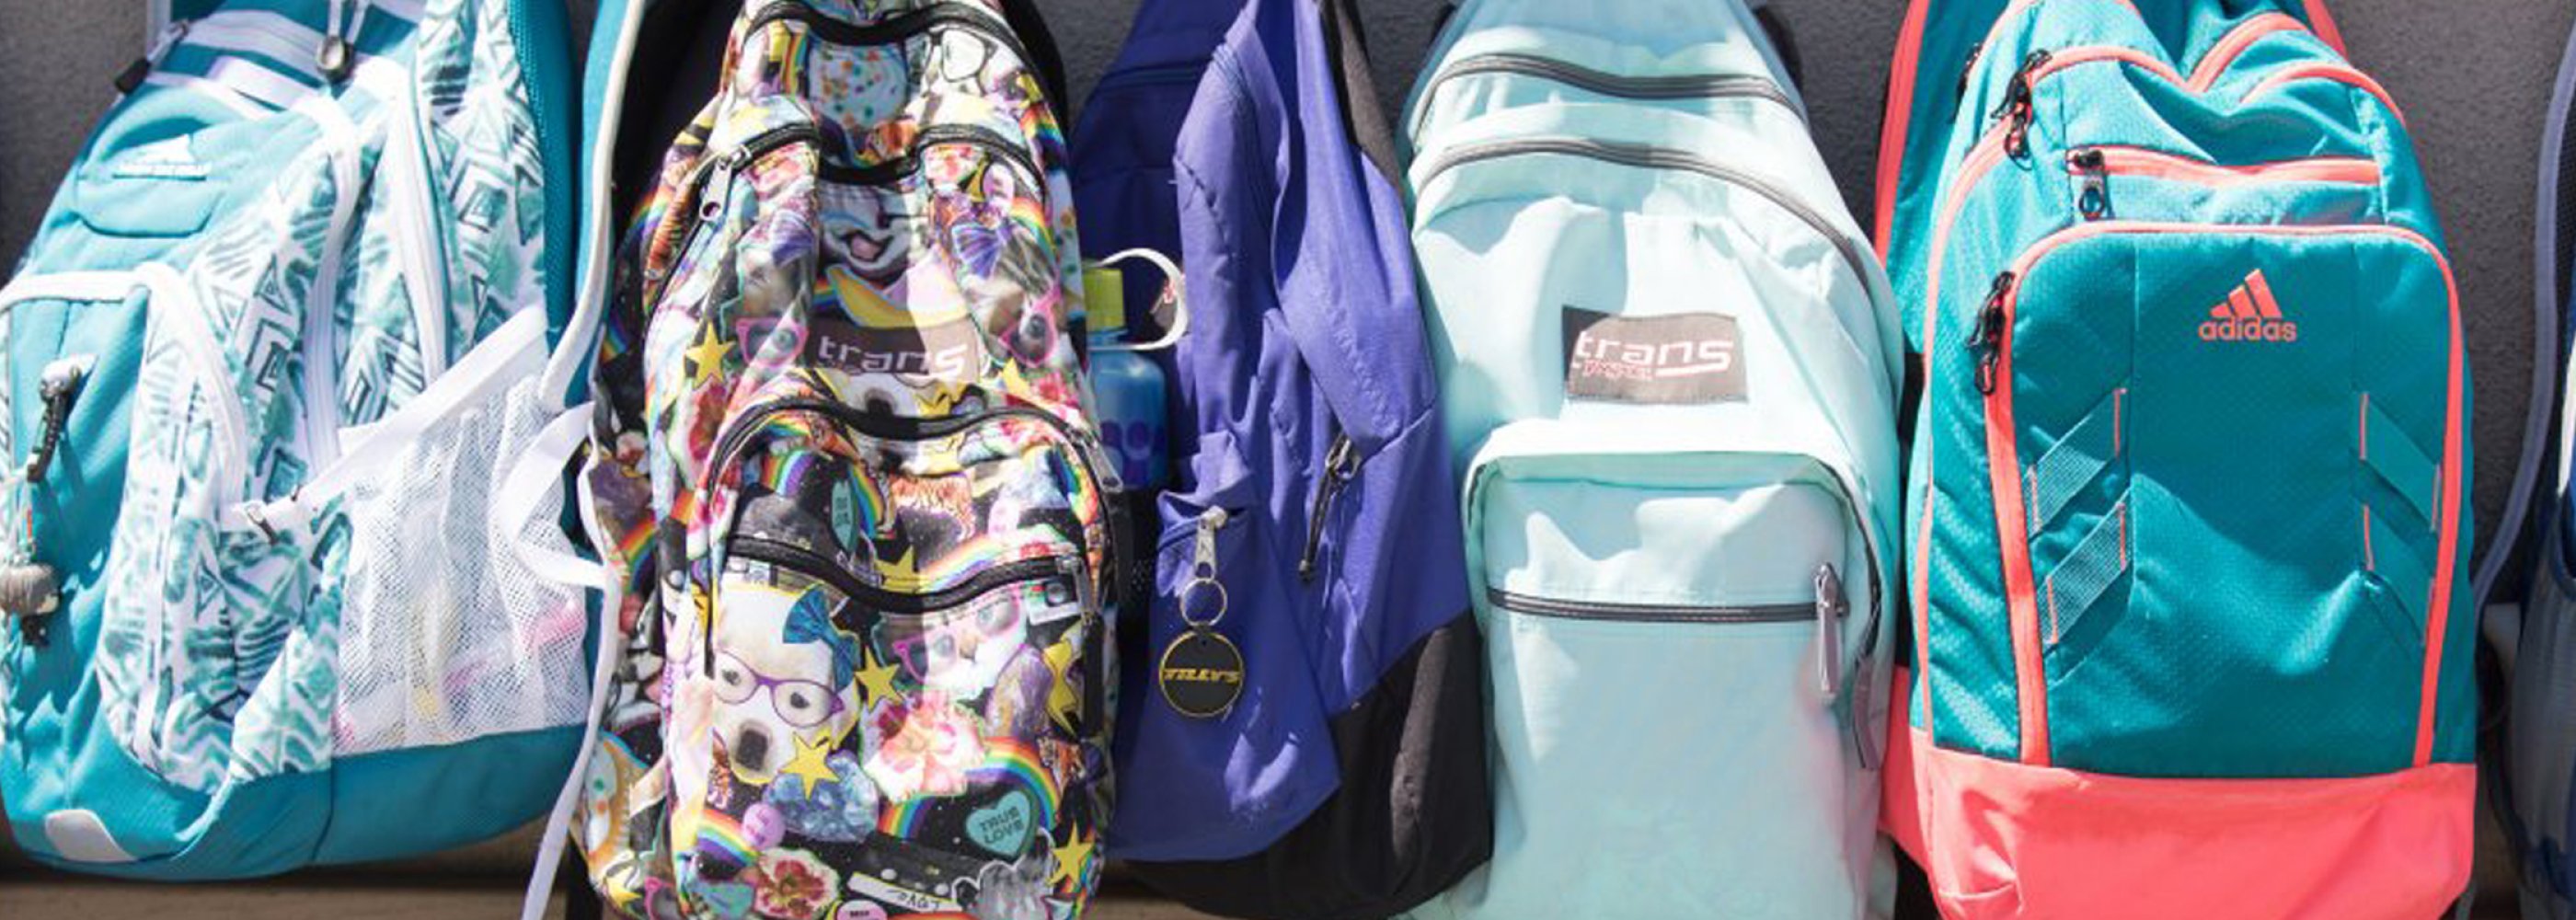 image of backpacks